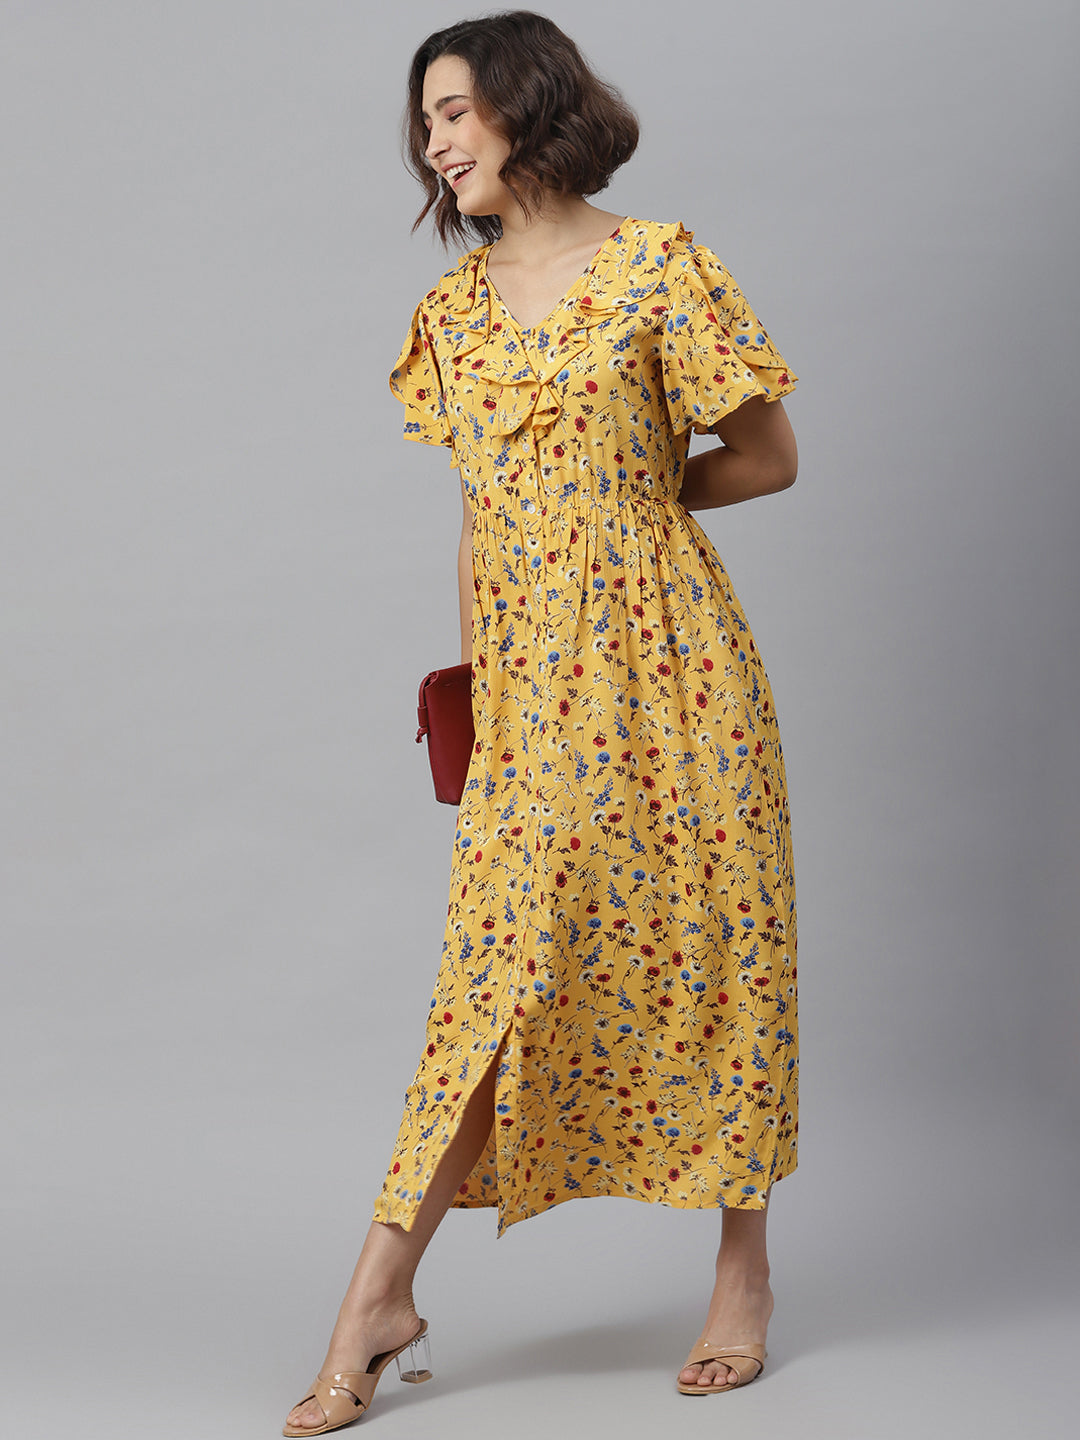 Women's Yellow Floral Maxi Dress - StyleStone